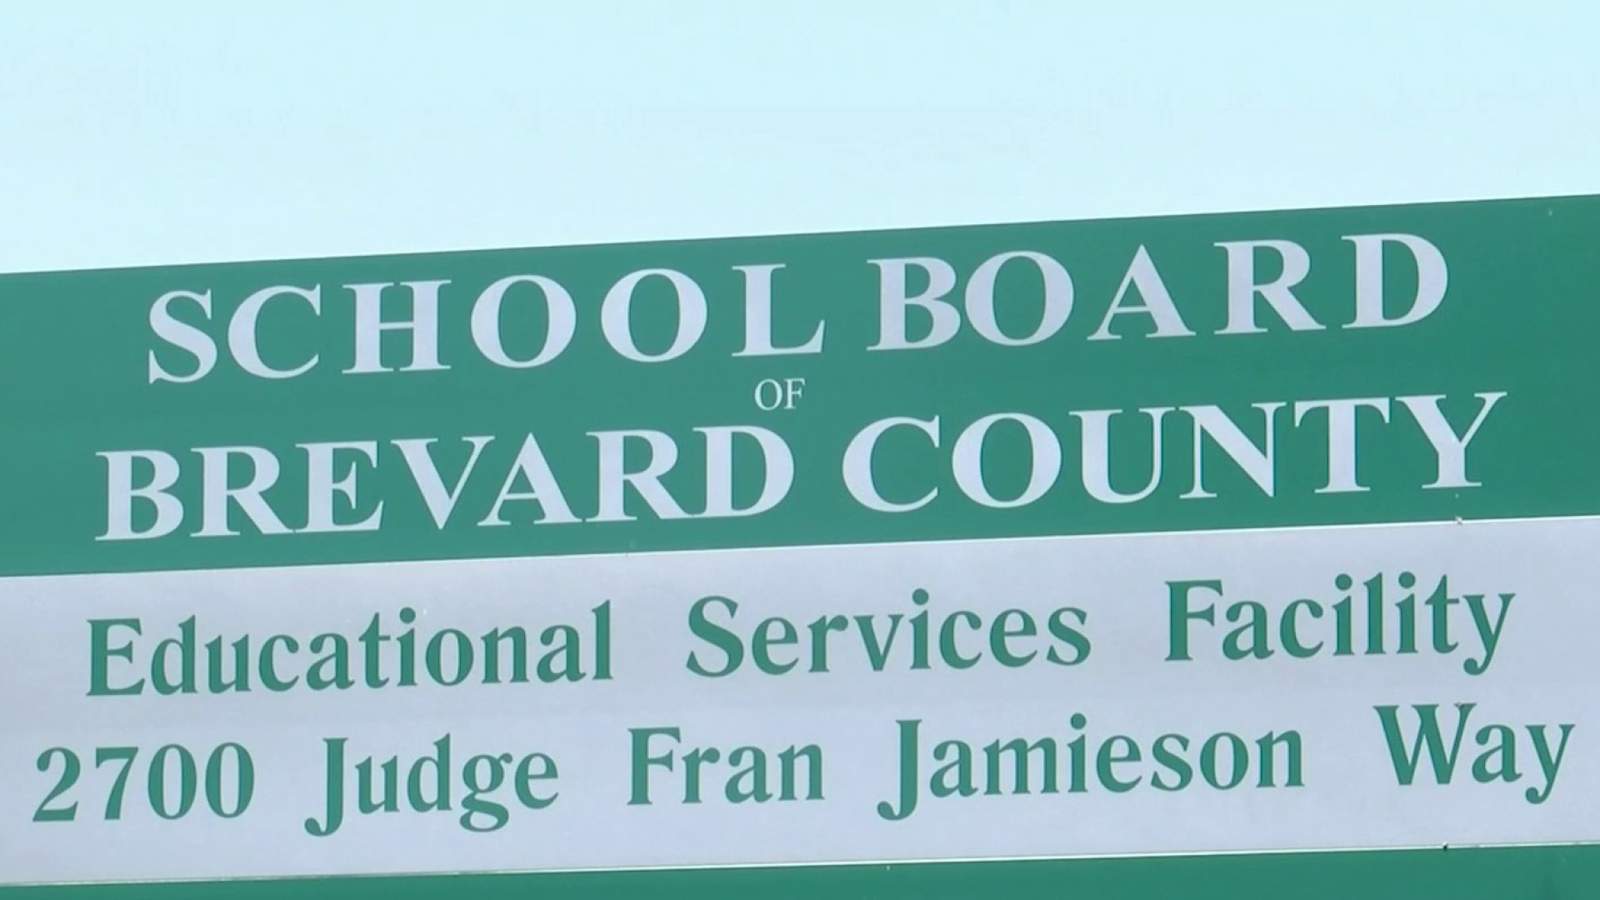 School board of brevard county jobs